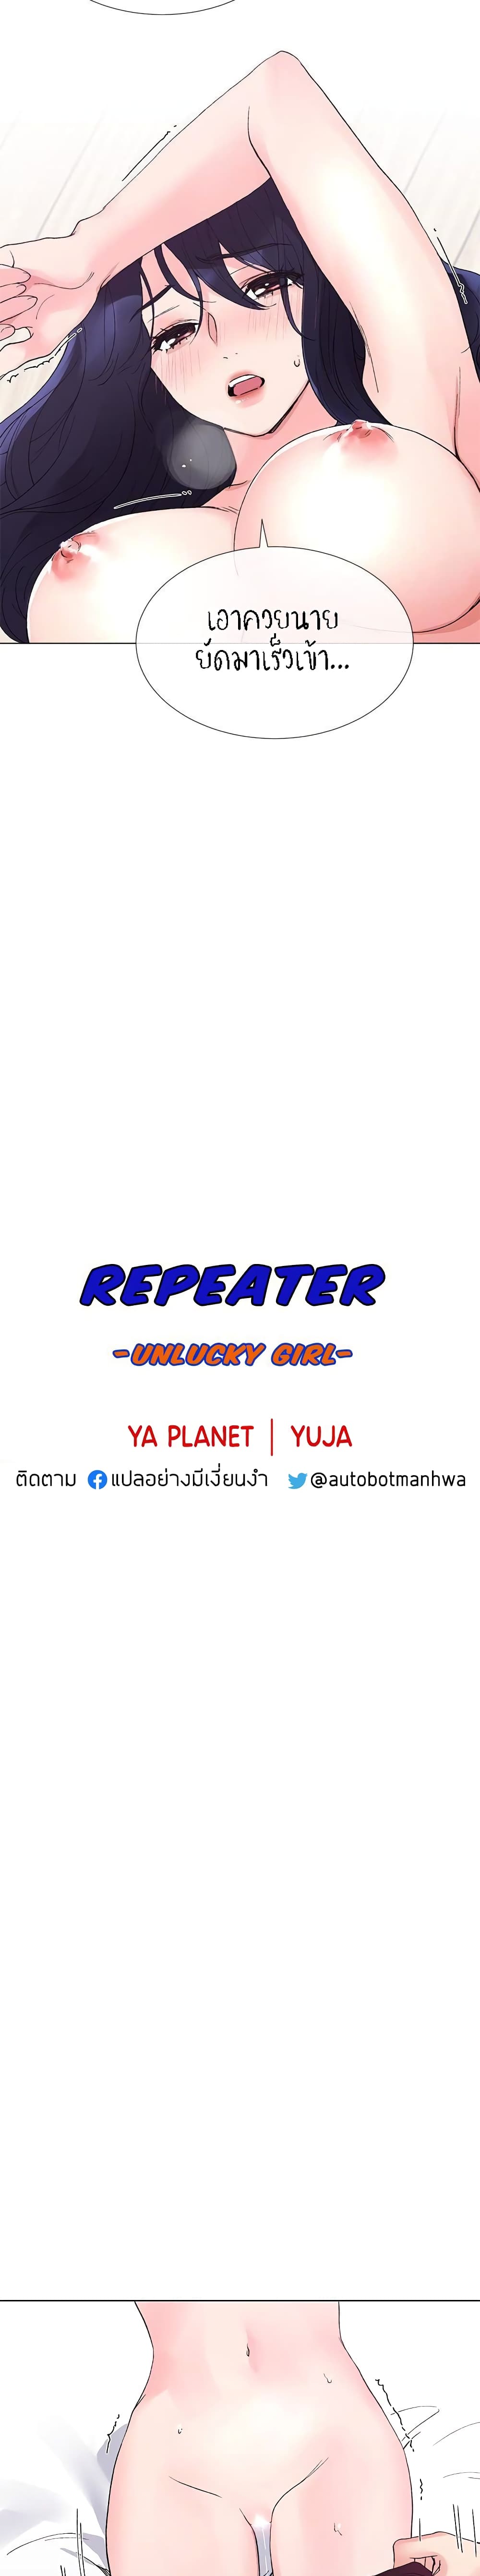 Repeater 36 02